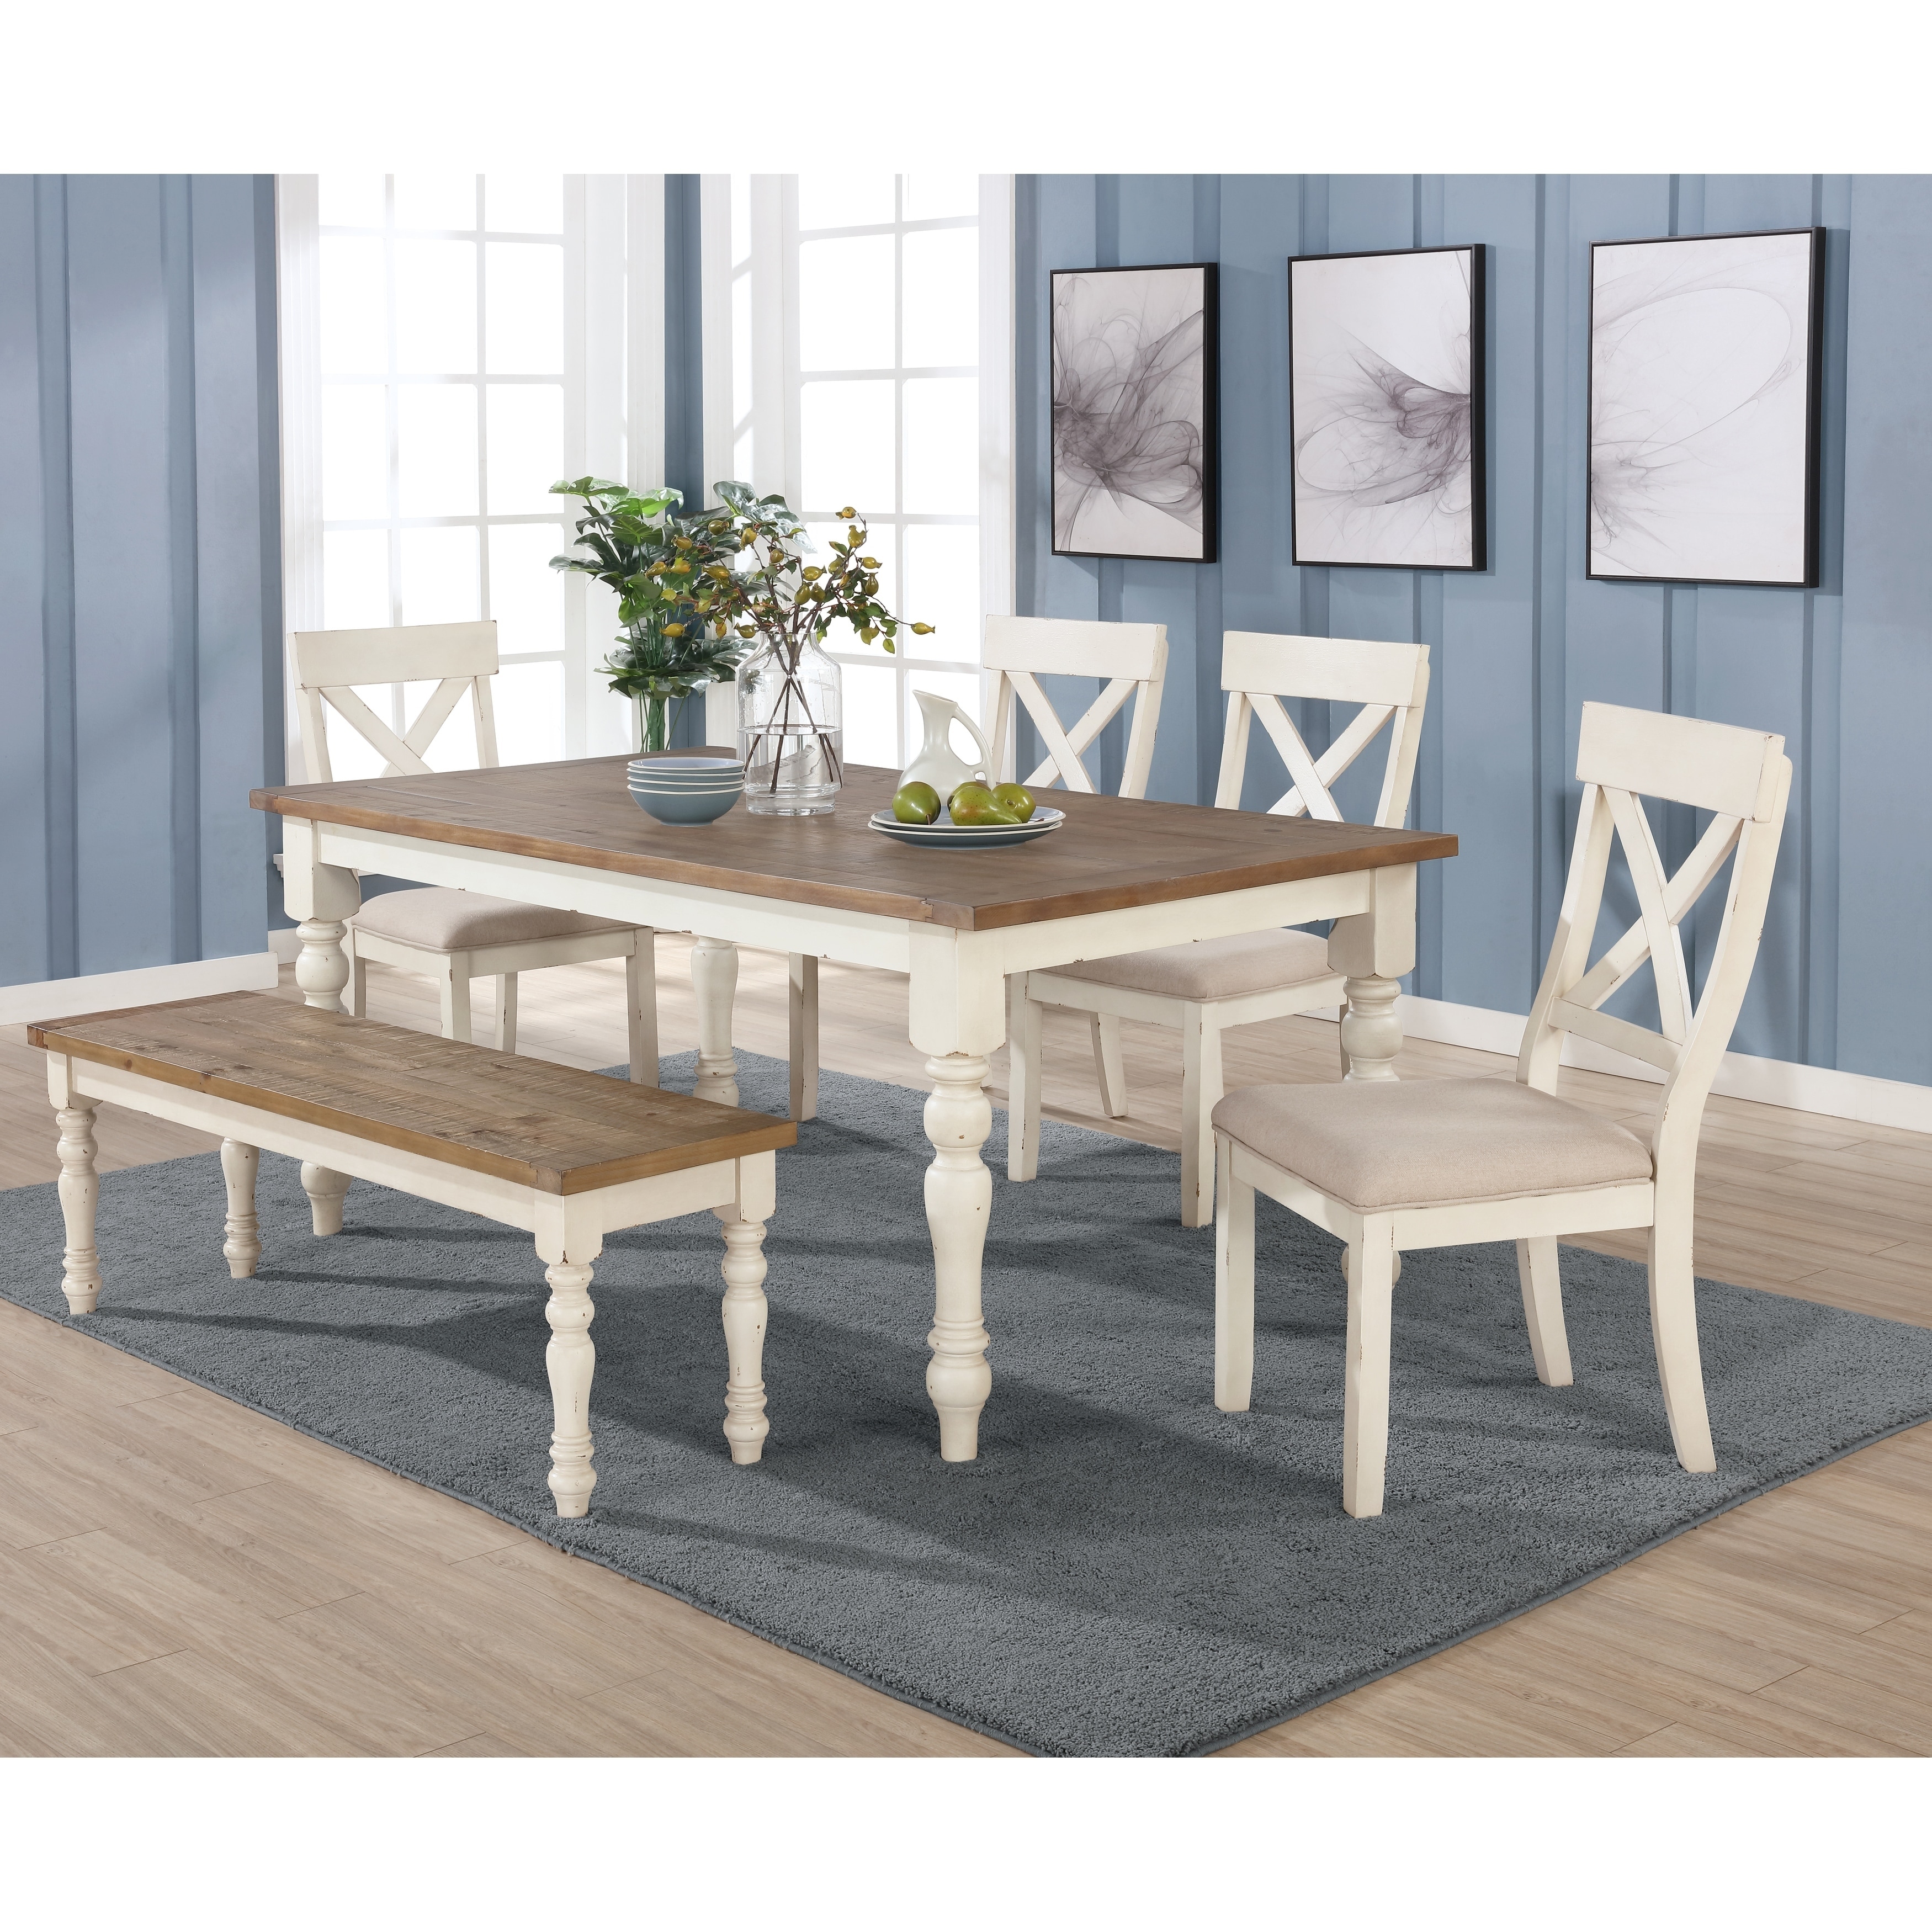 Prato Antique White Distressed Oak 6 Piece Dining Table Set Overstock 30933944